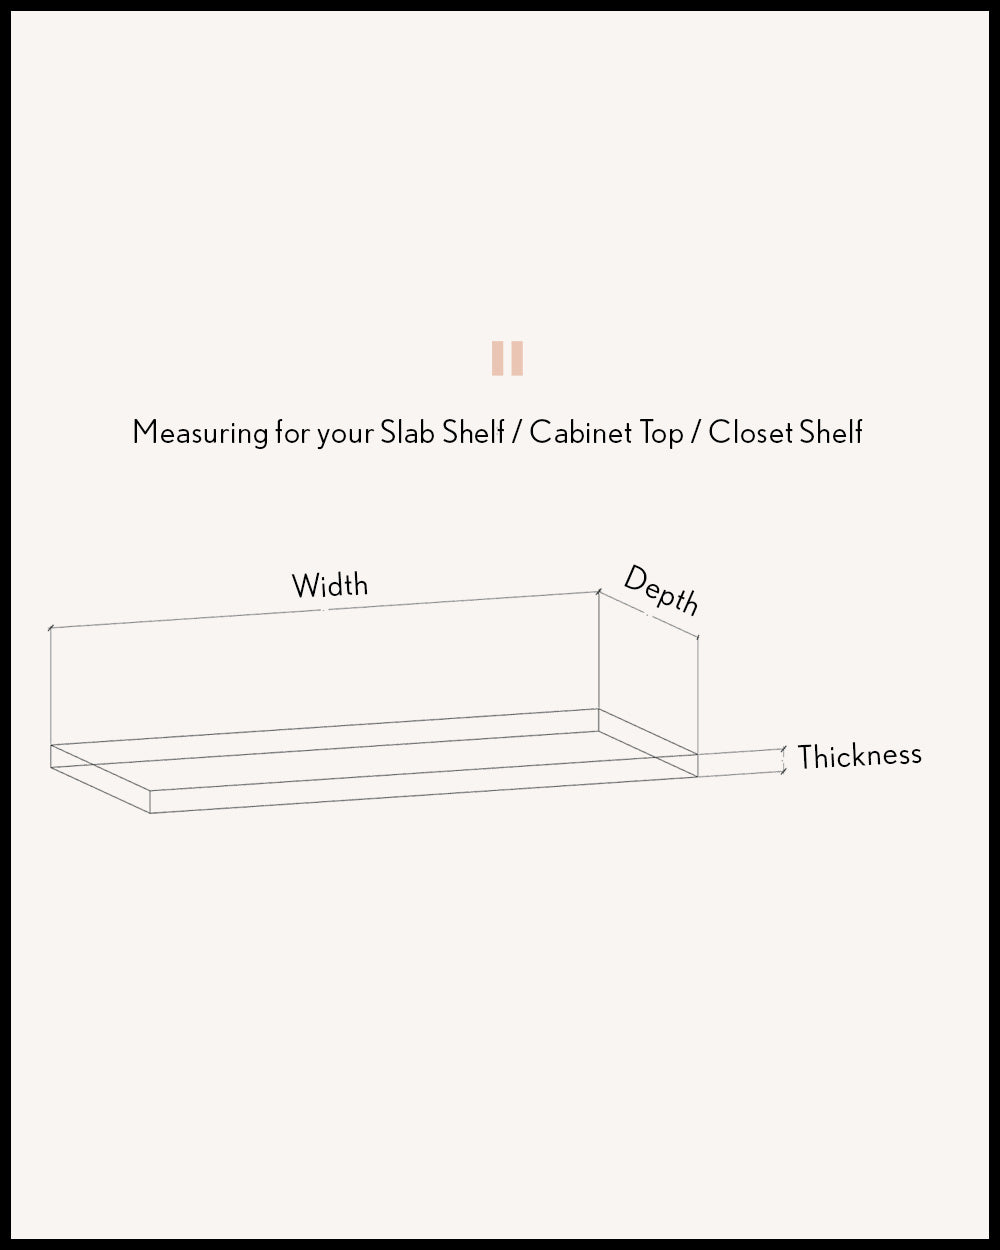 Bleached Oak 1.75" thick Cabinet Top / Slab Shelf